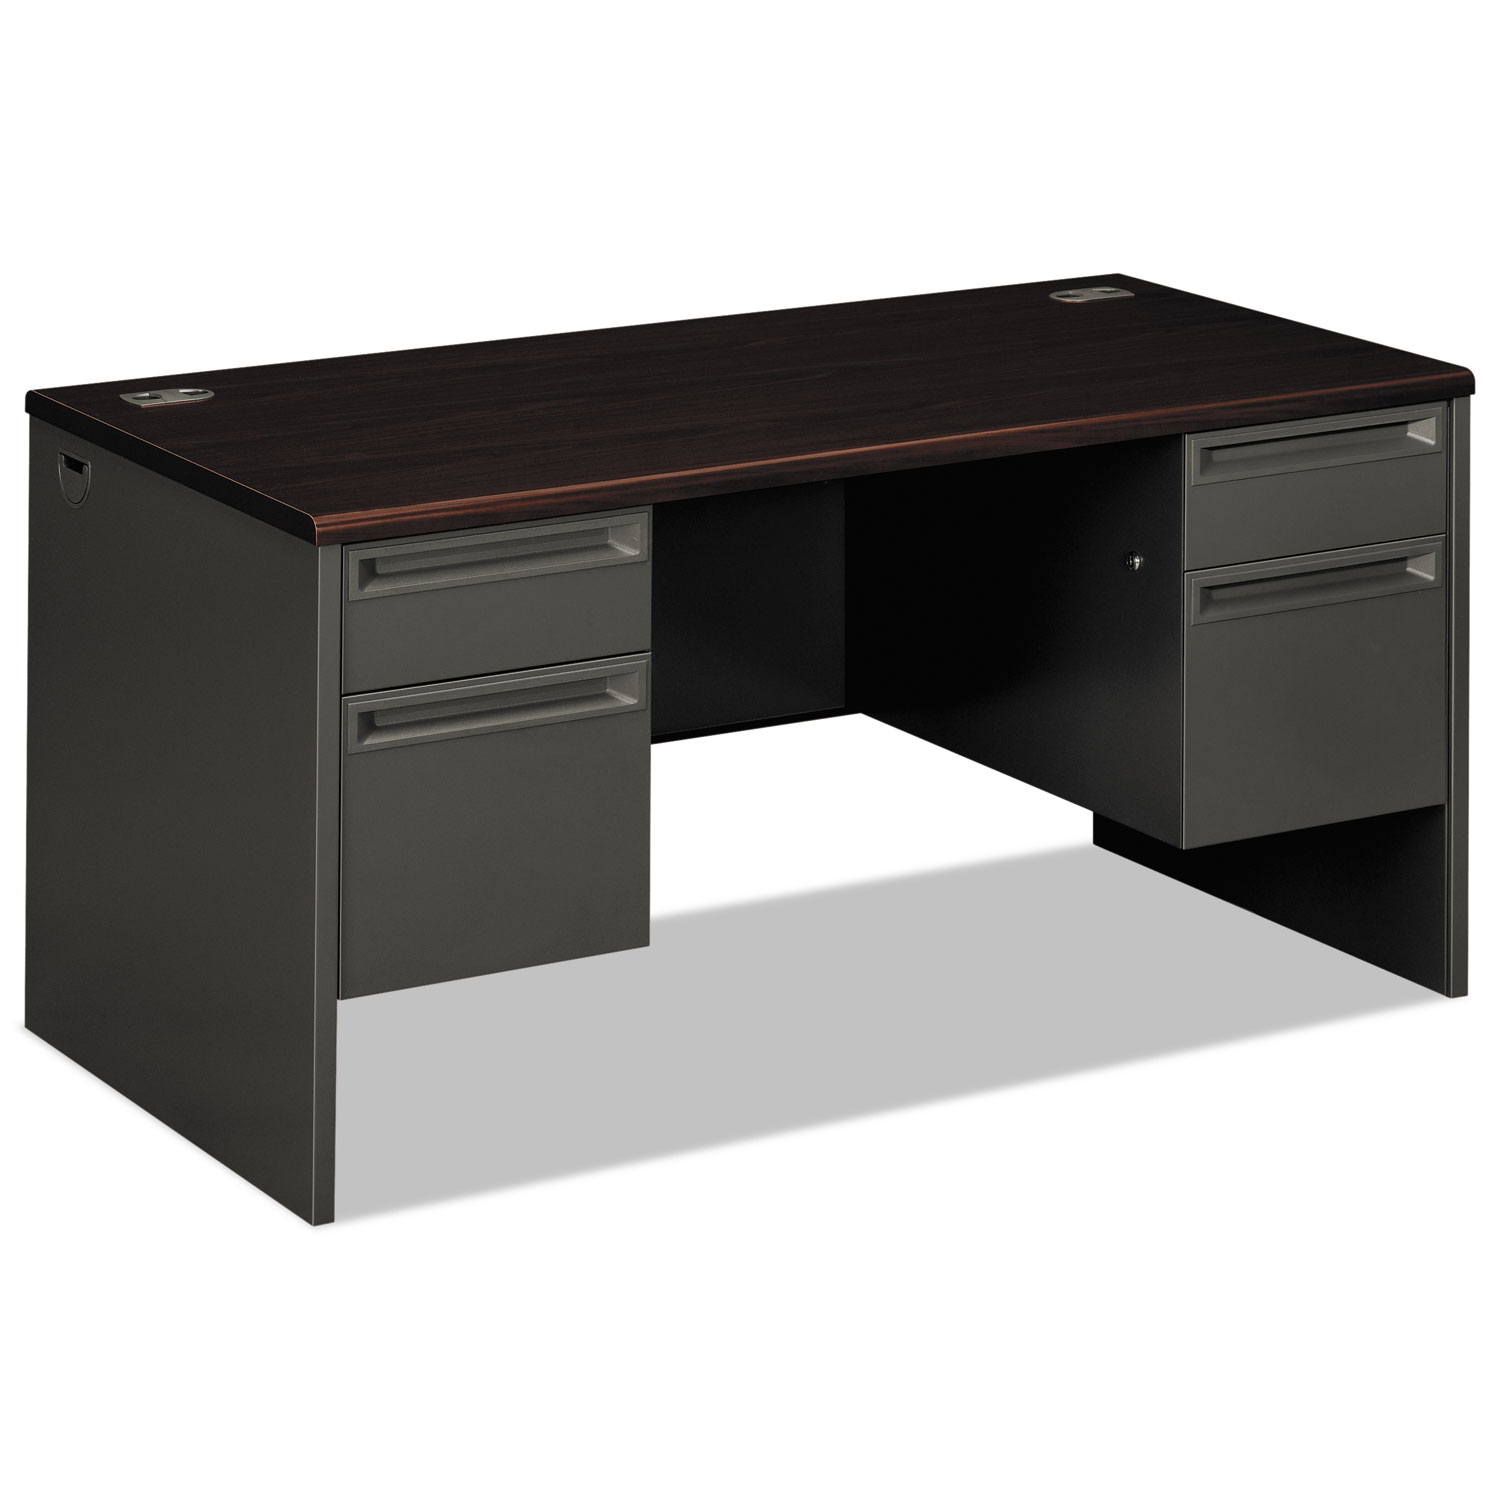 38000 Series Double Pedestal Desk, 60w x 30d x 29-1/2h, Mahogany/Charcoal